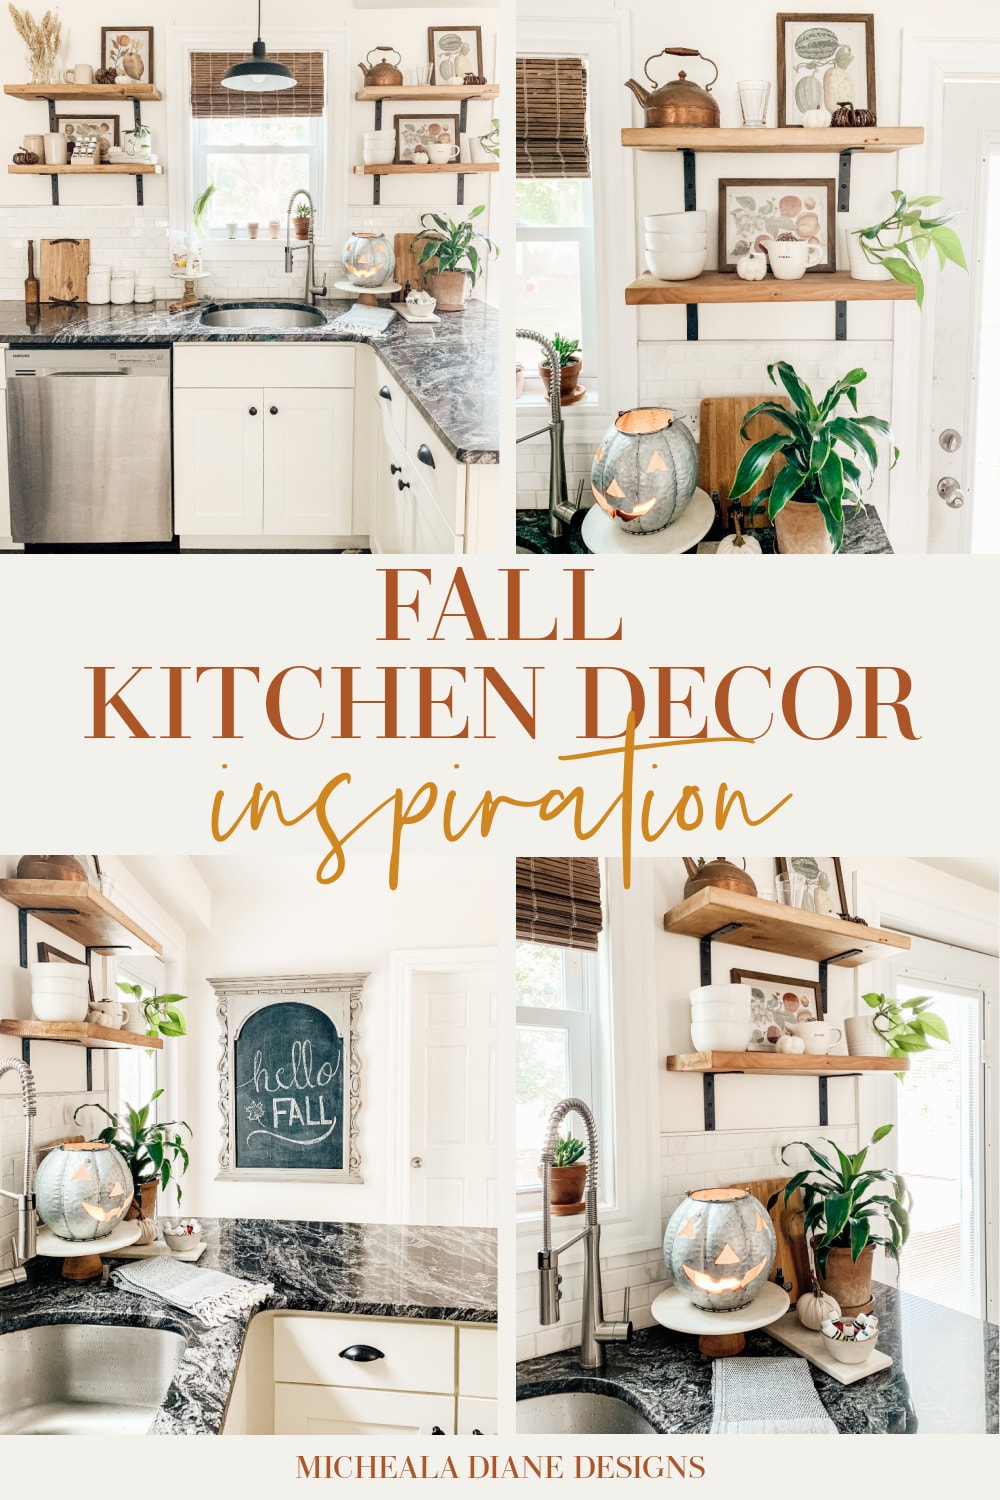 Fall Kitchen decor